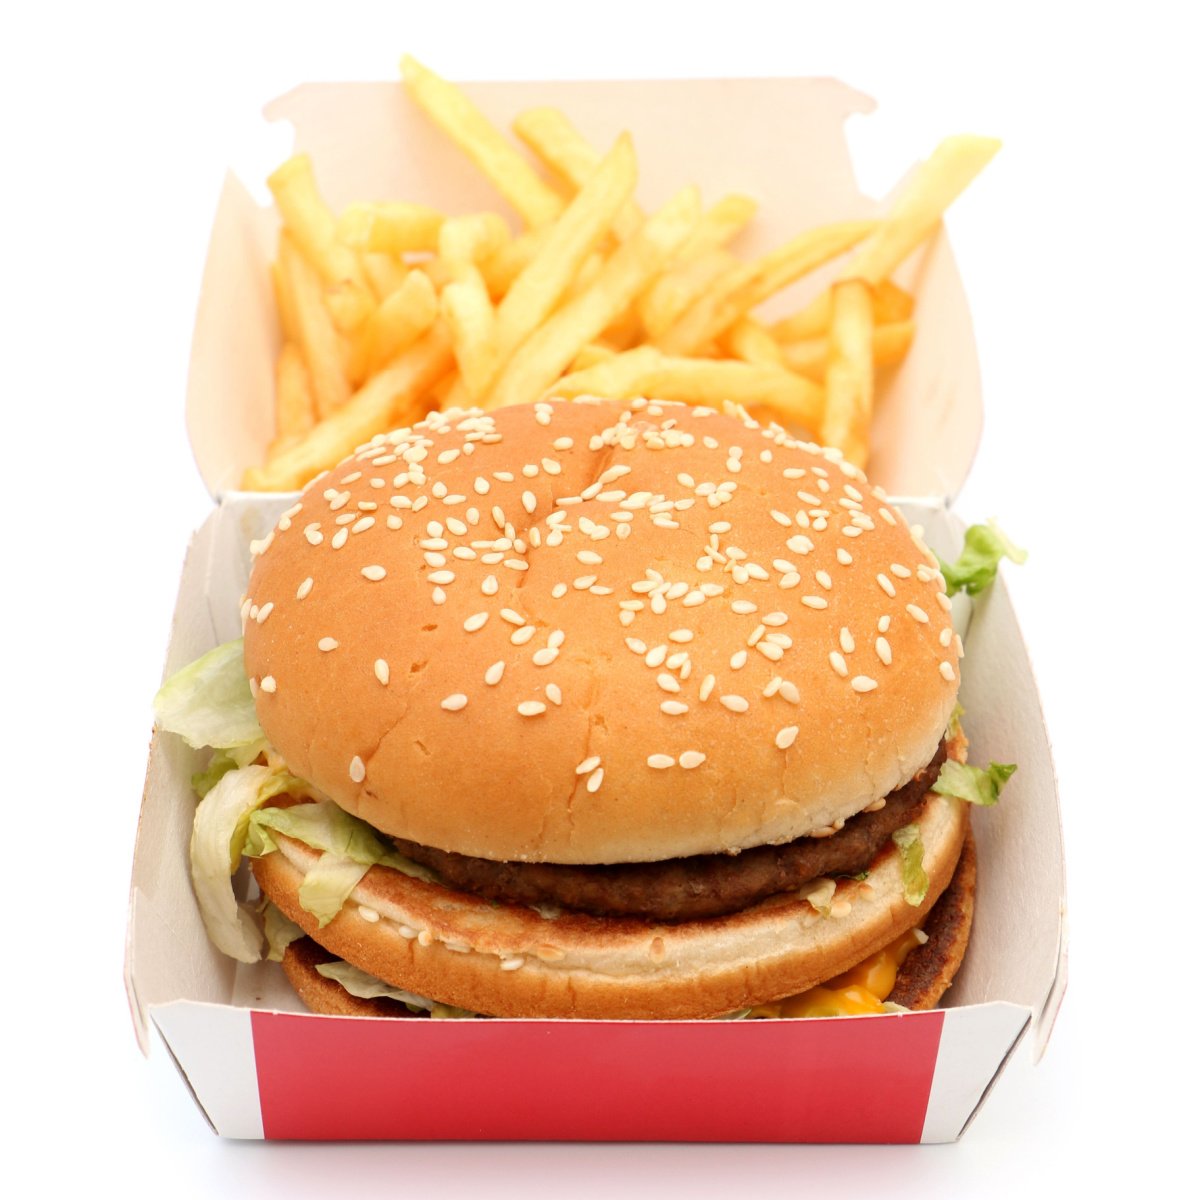 mcdonalds burger and fries